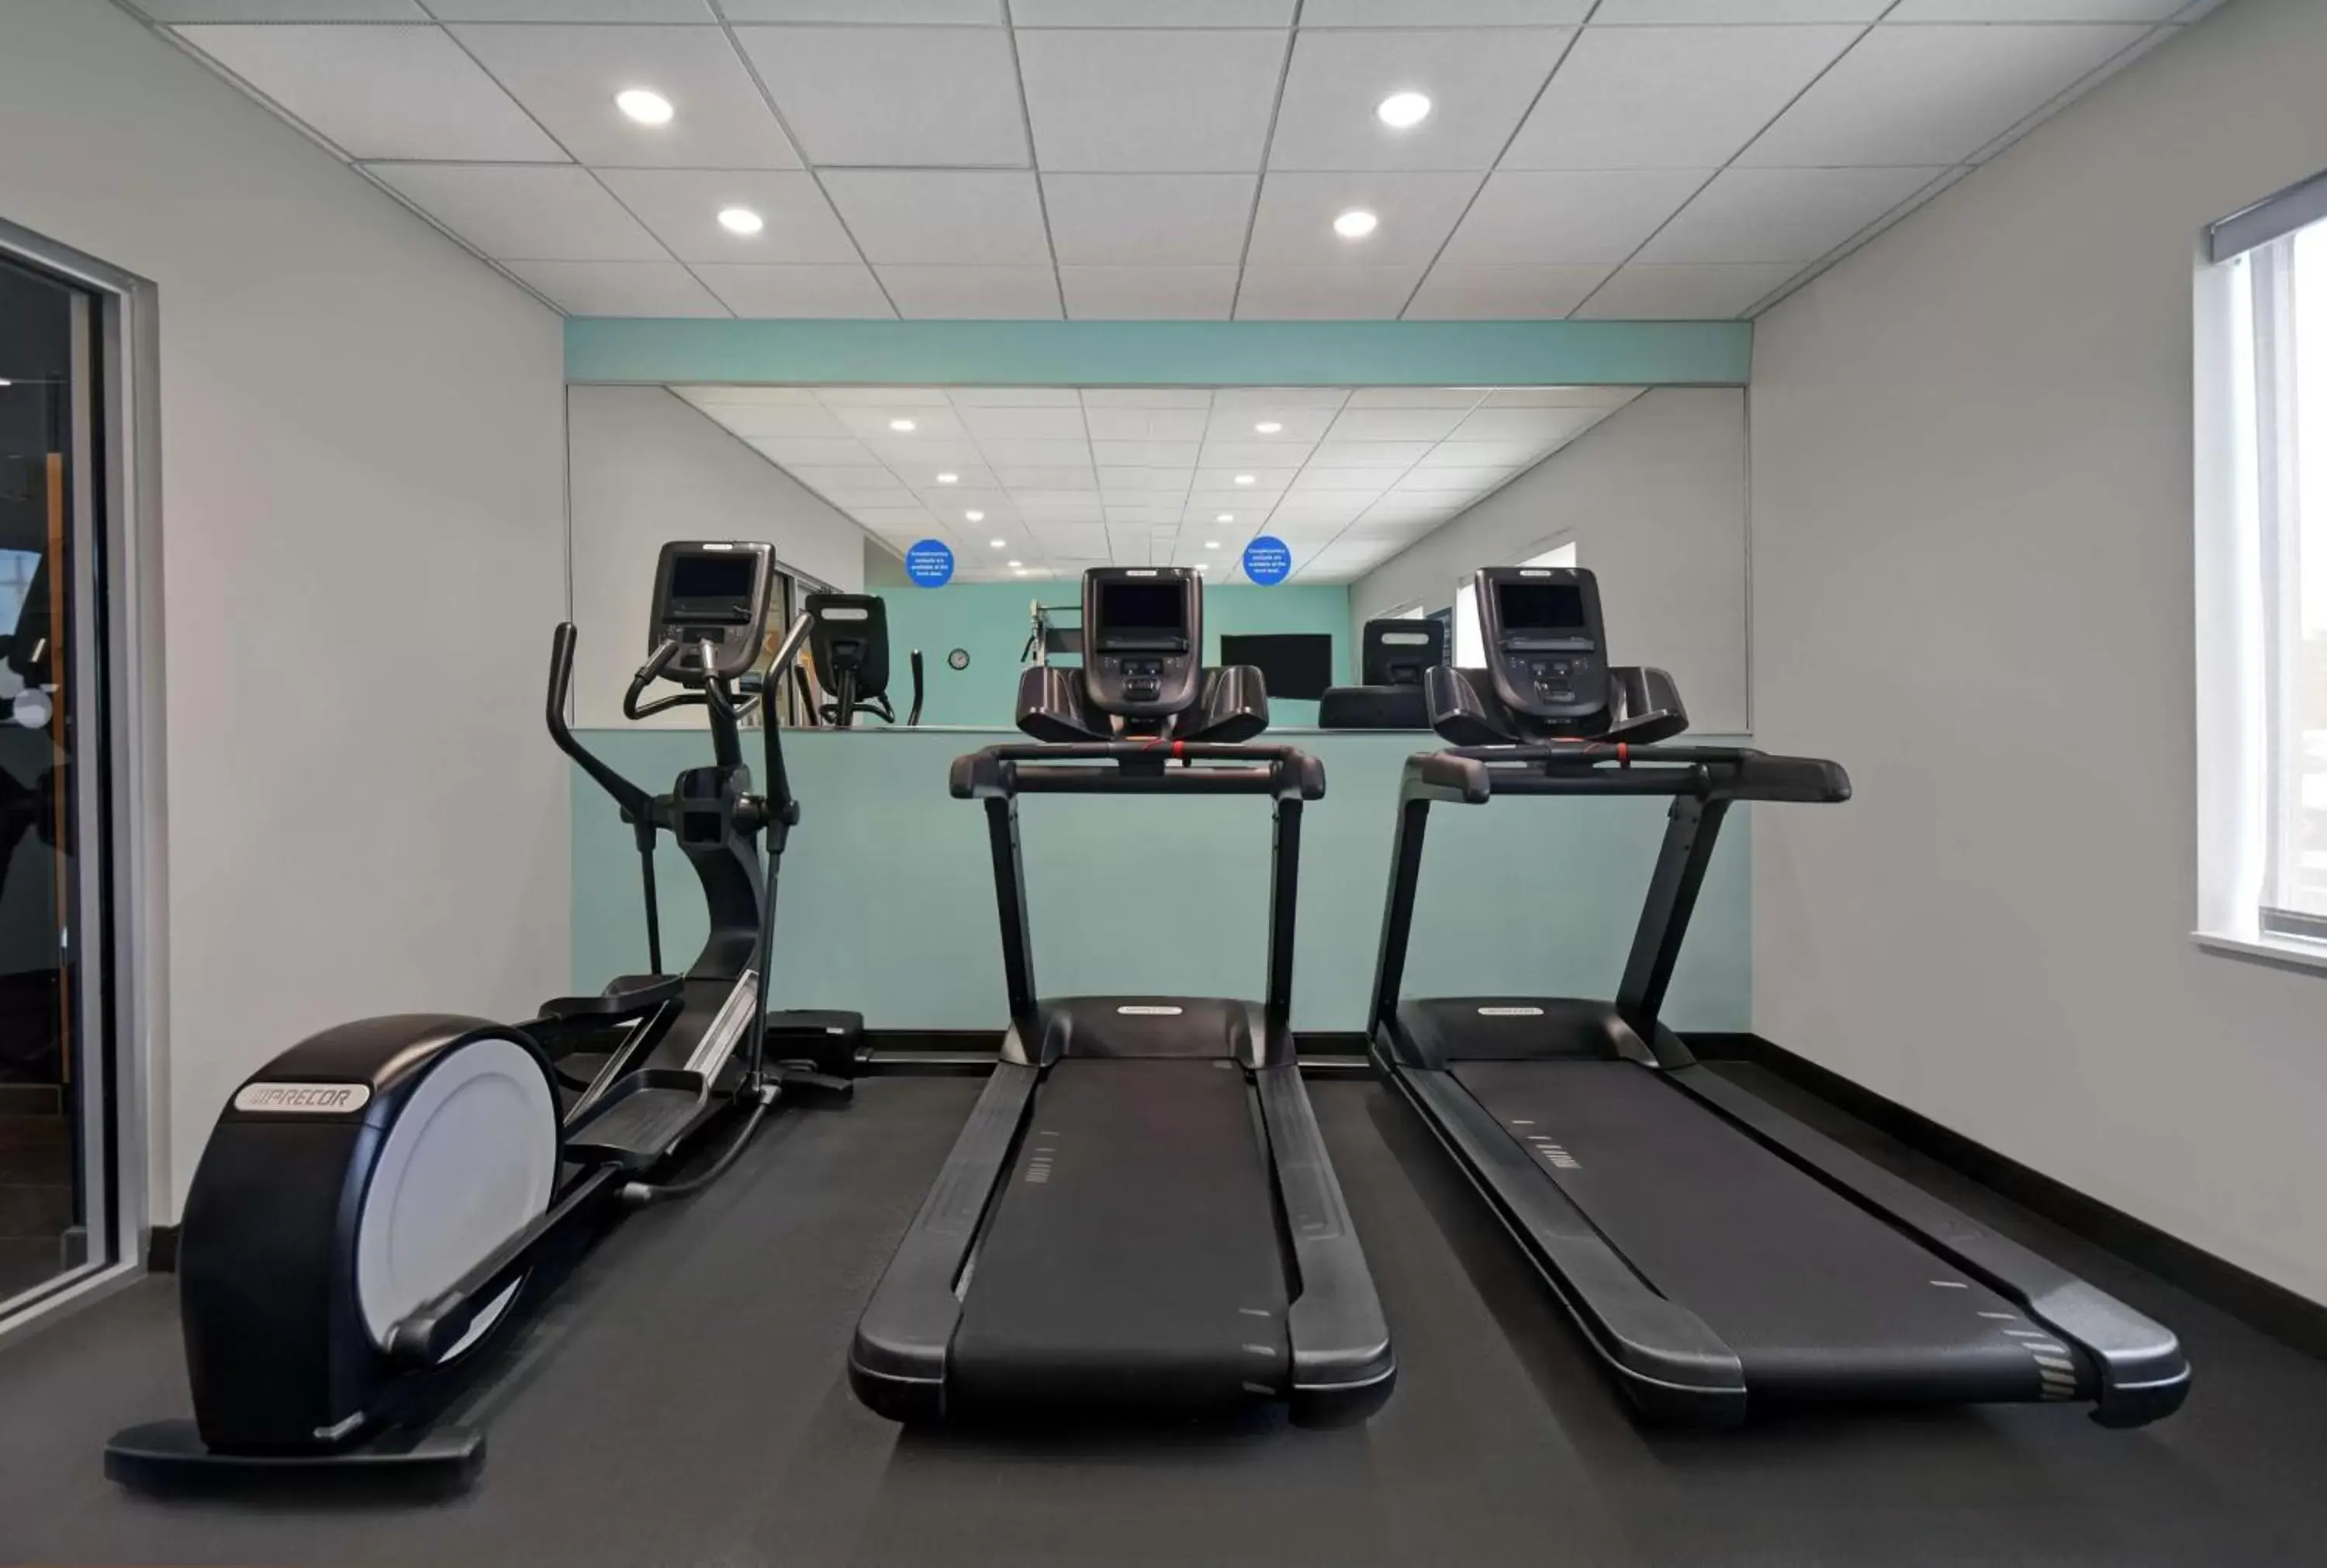 Fitness centre/facilities, Fitness Center/Facilities in Tru By Hilton Monroe, MI